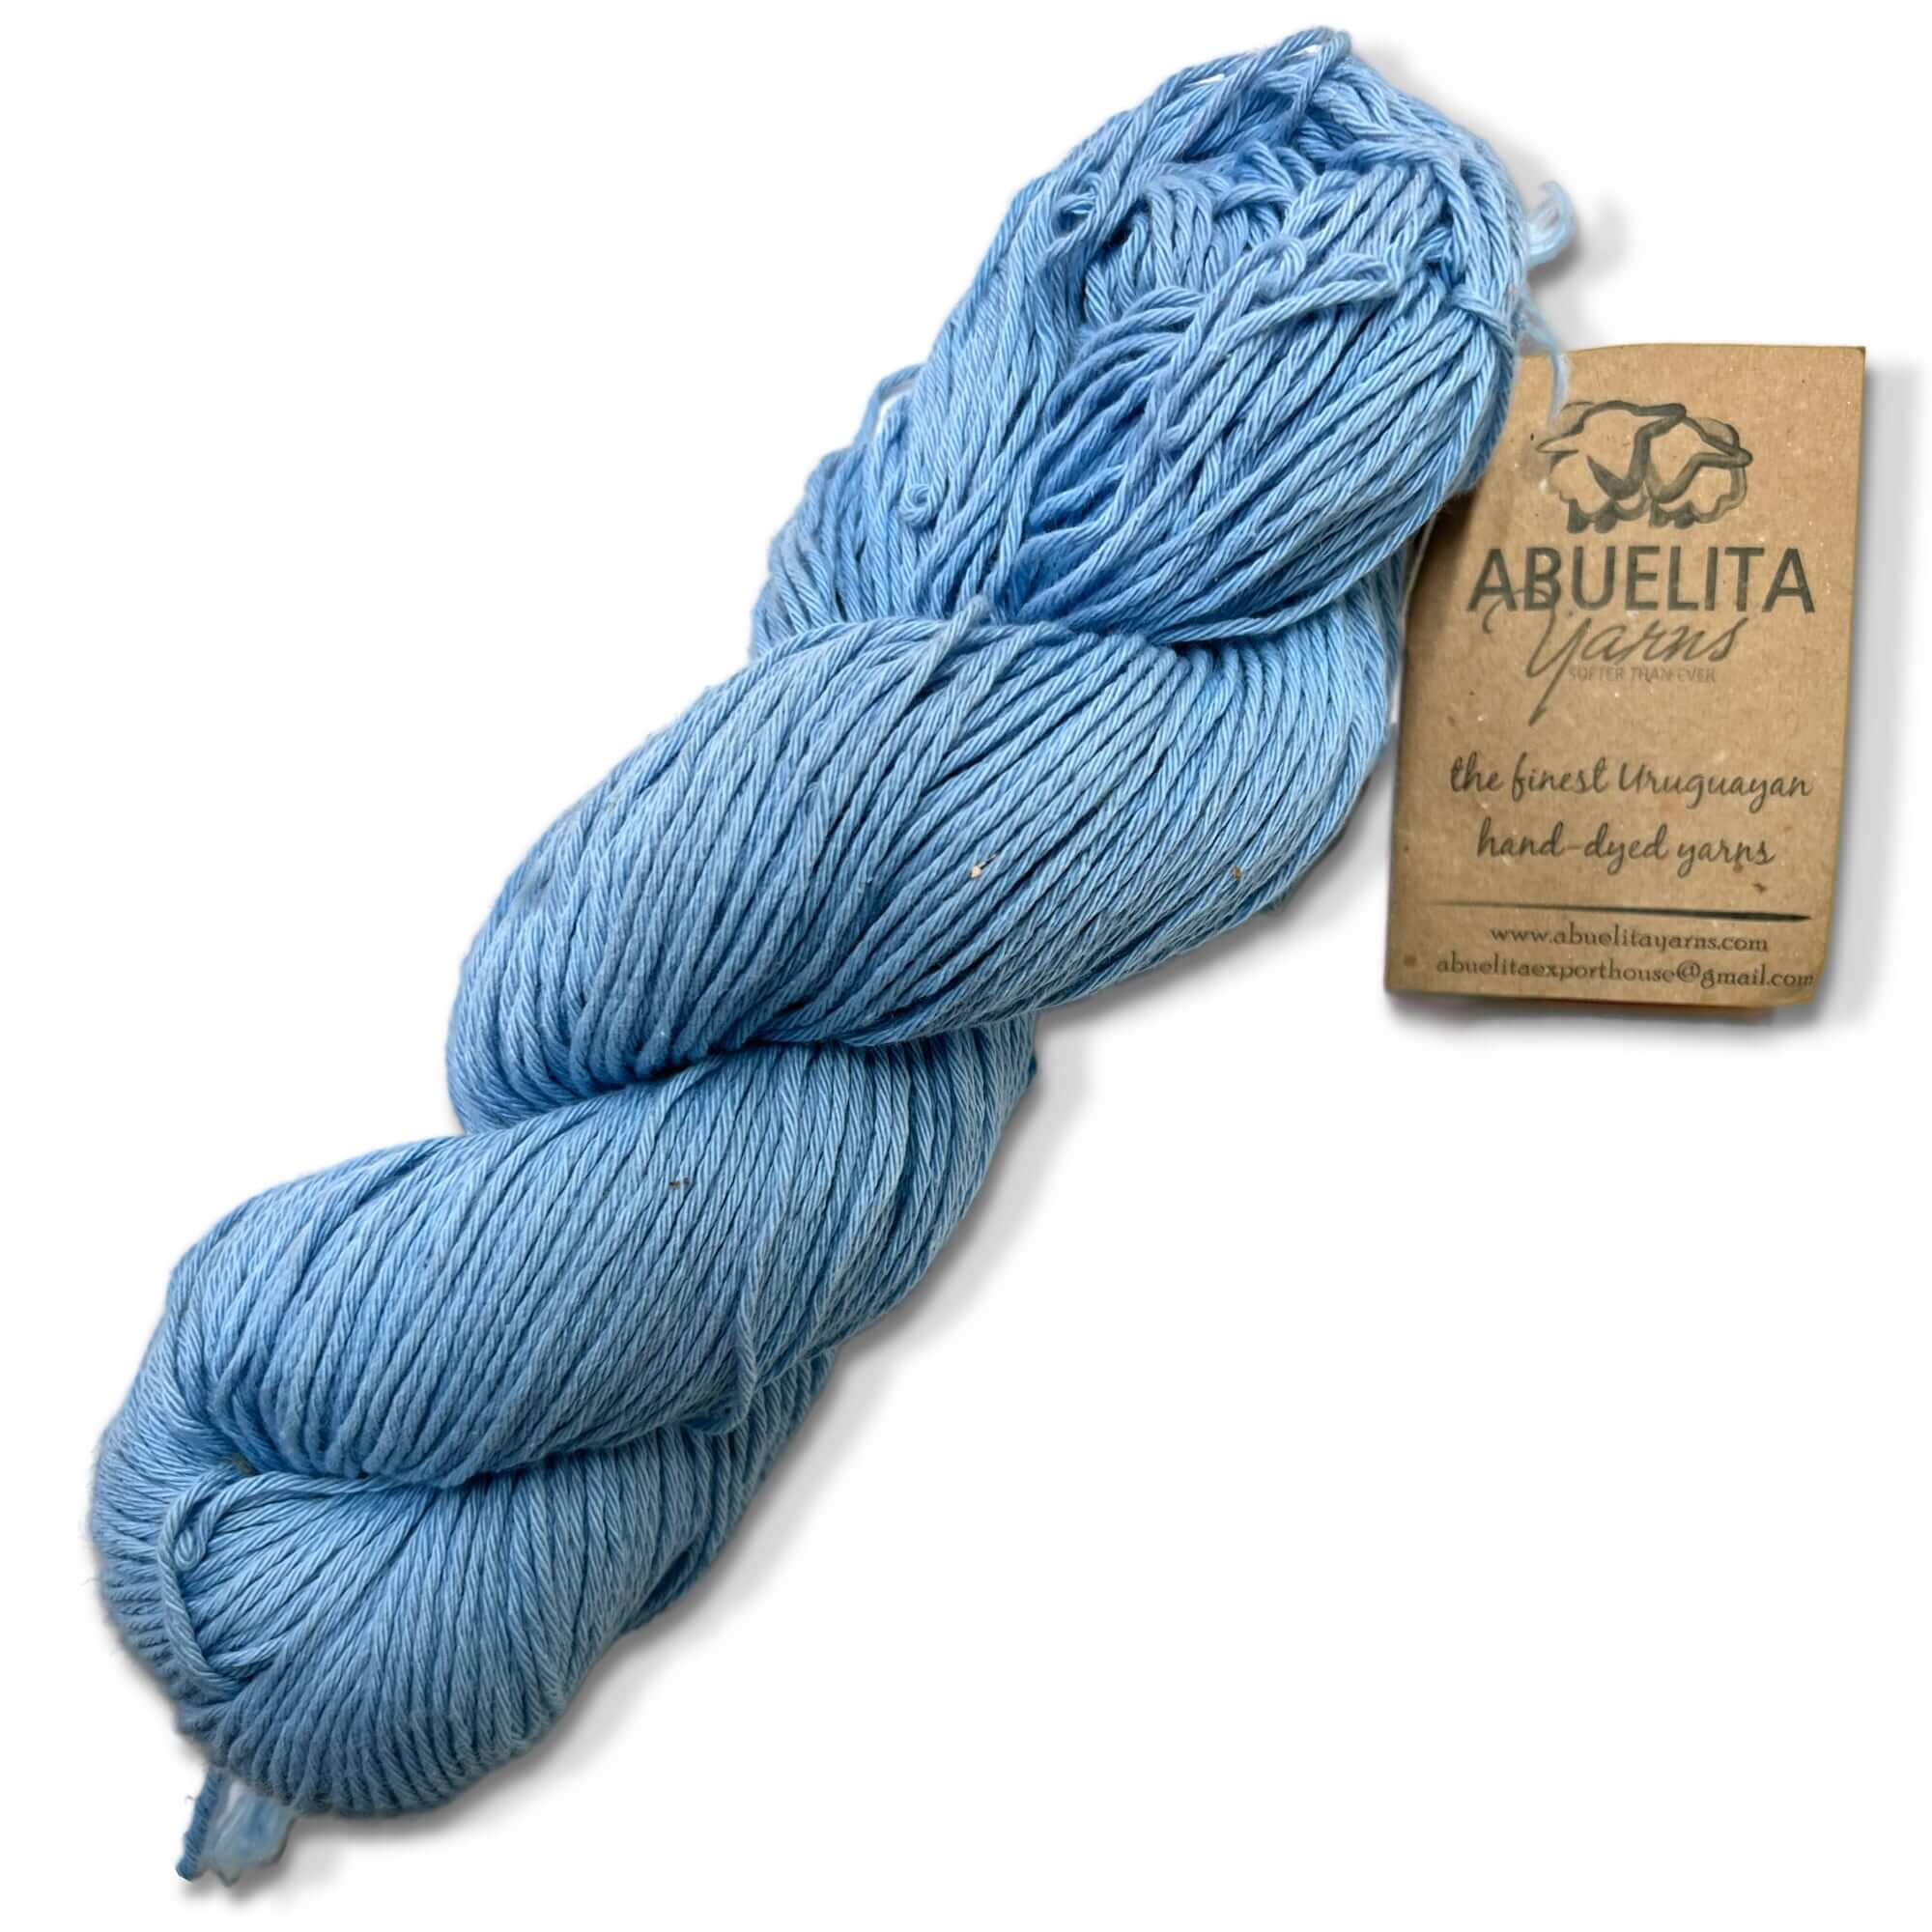 DK Pima Cotton Yarn by Abuelita Yarns, Fair Trade Hand Dyed Yarn Smooth Loosely Plied Cotton Yarn Light Blue